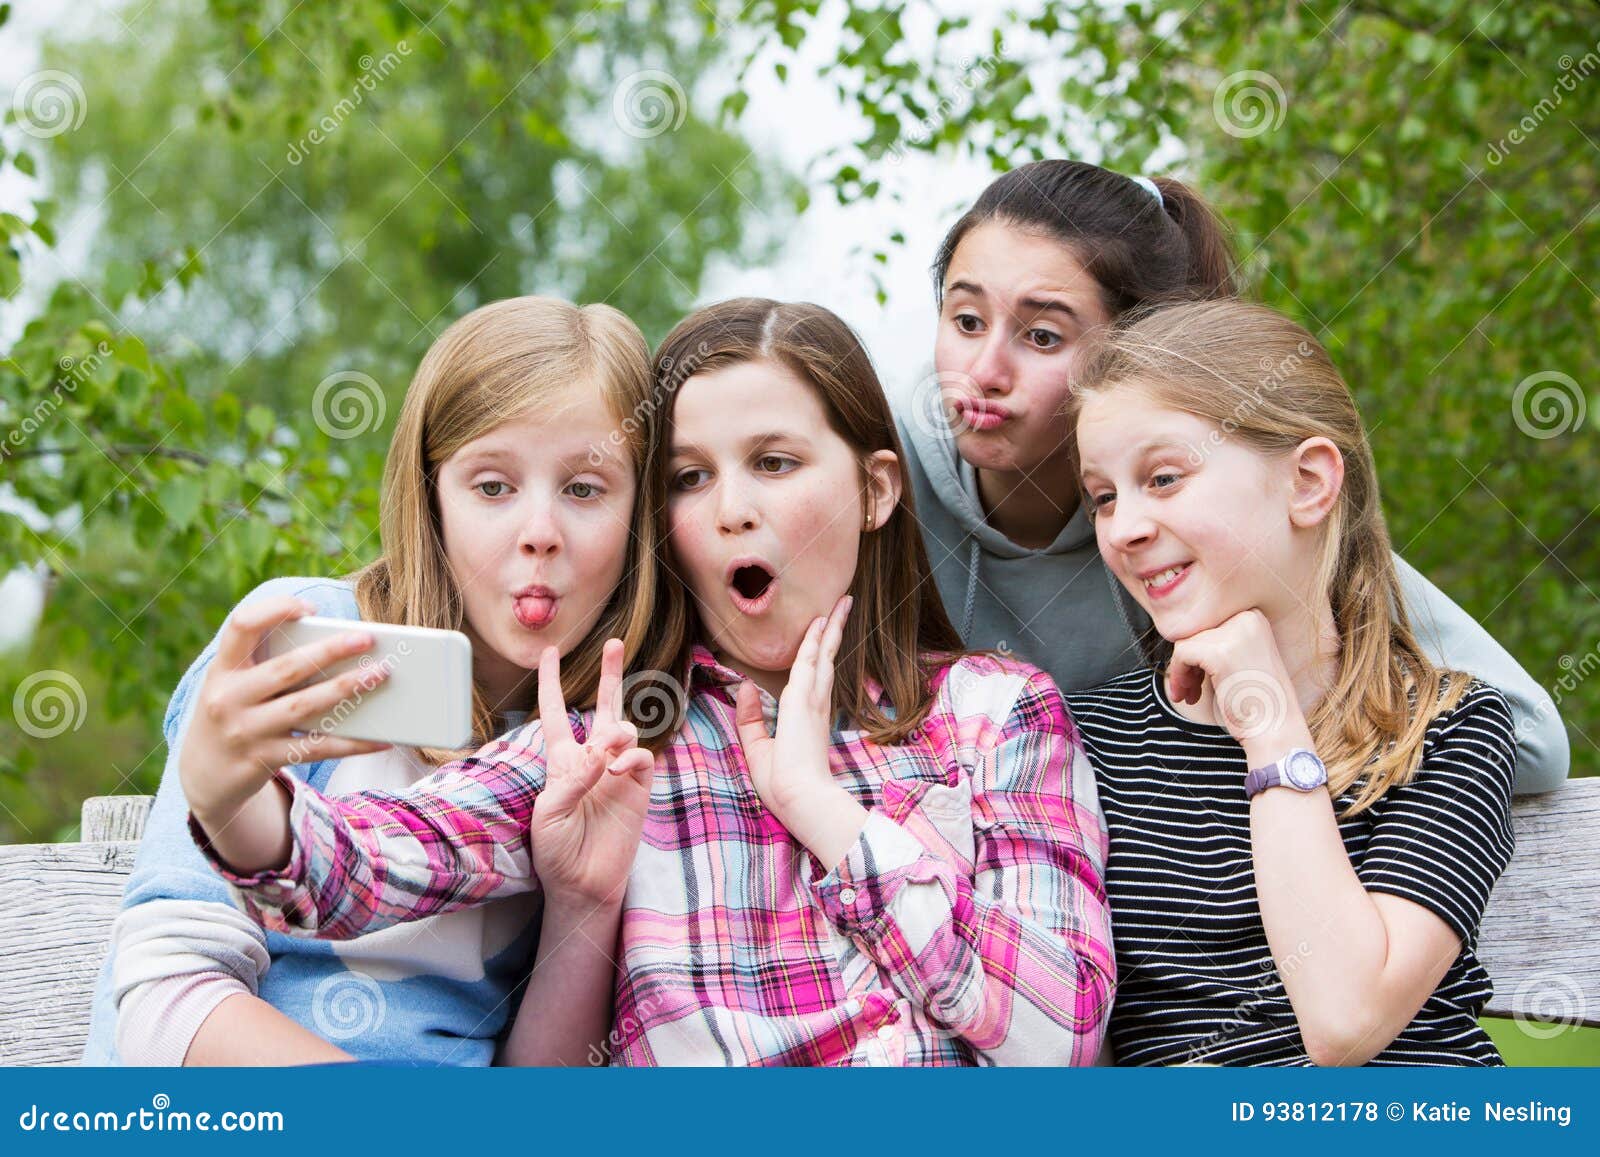 Cartoon Banners Group Friends Taking Selfie Stock Vector (Royalty Free)  2262669835 | Shutterstock